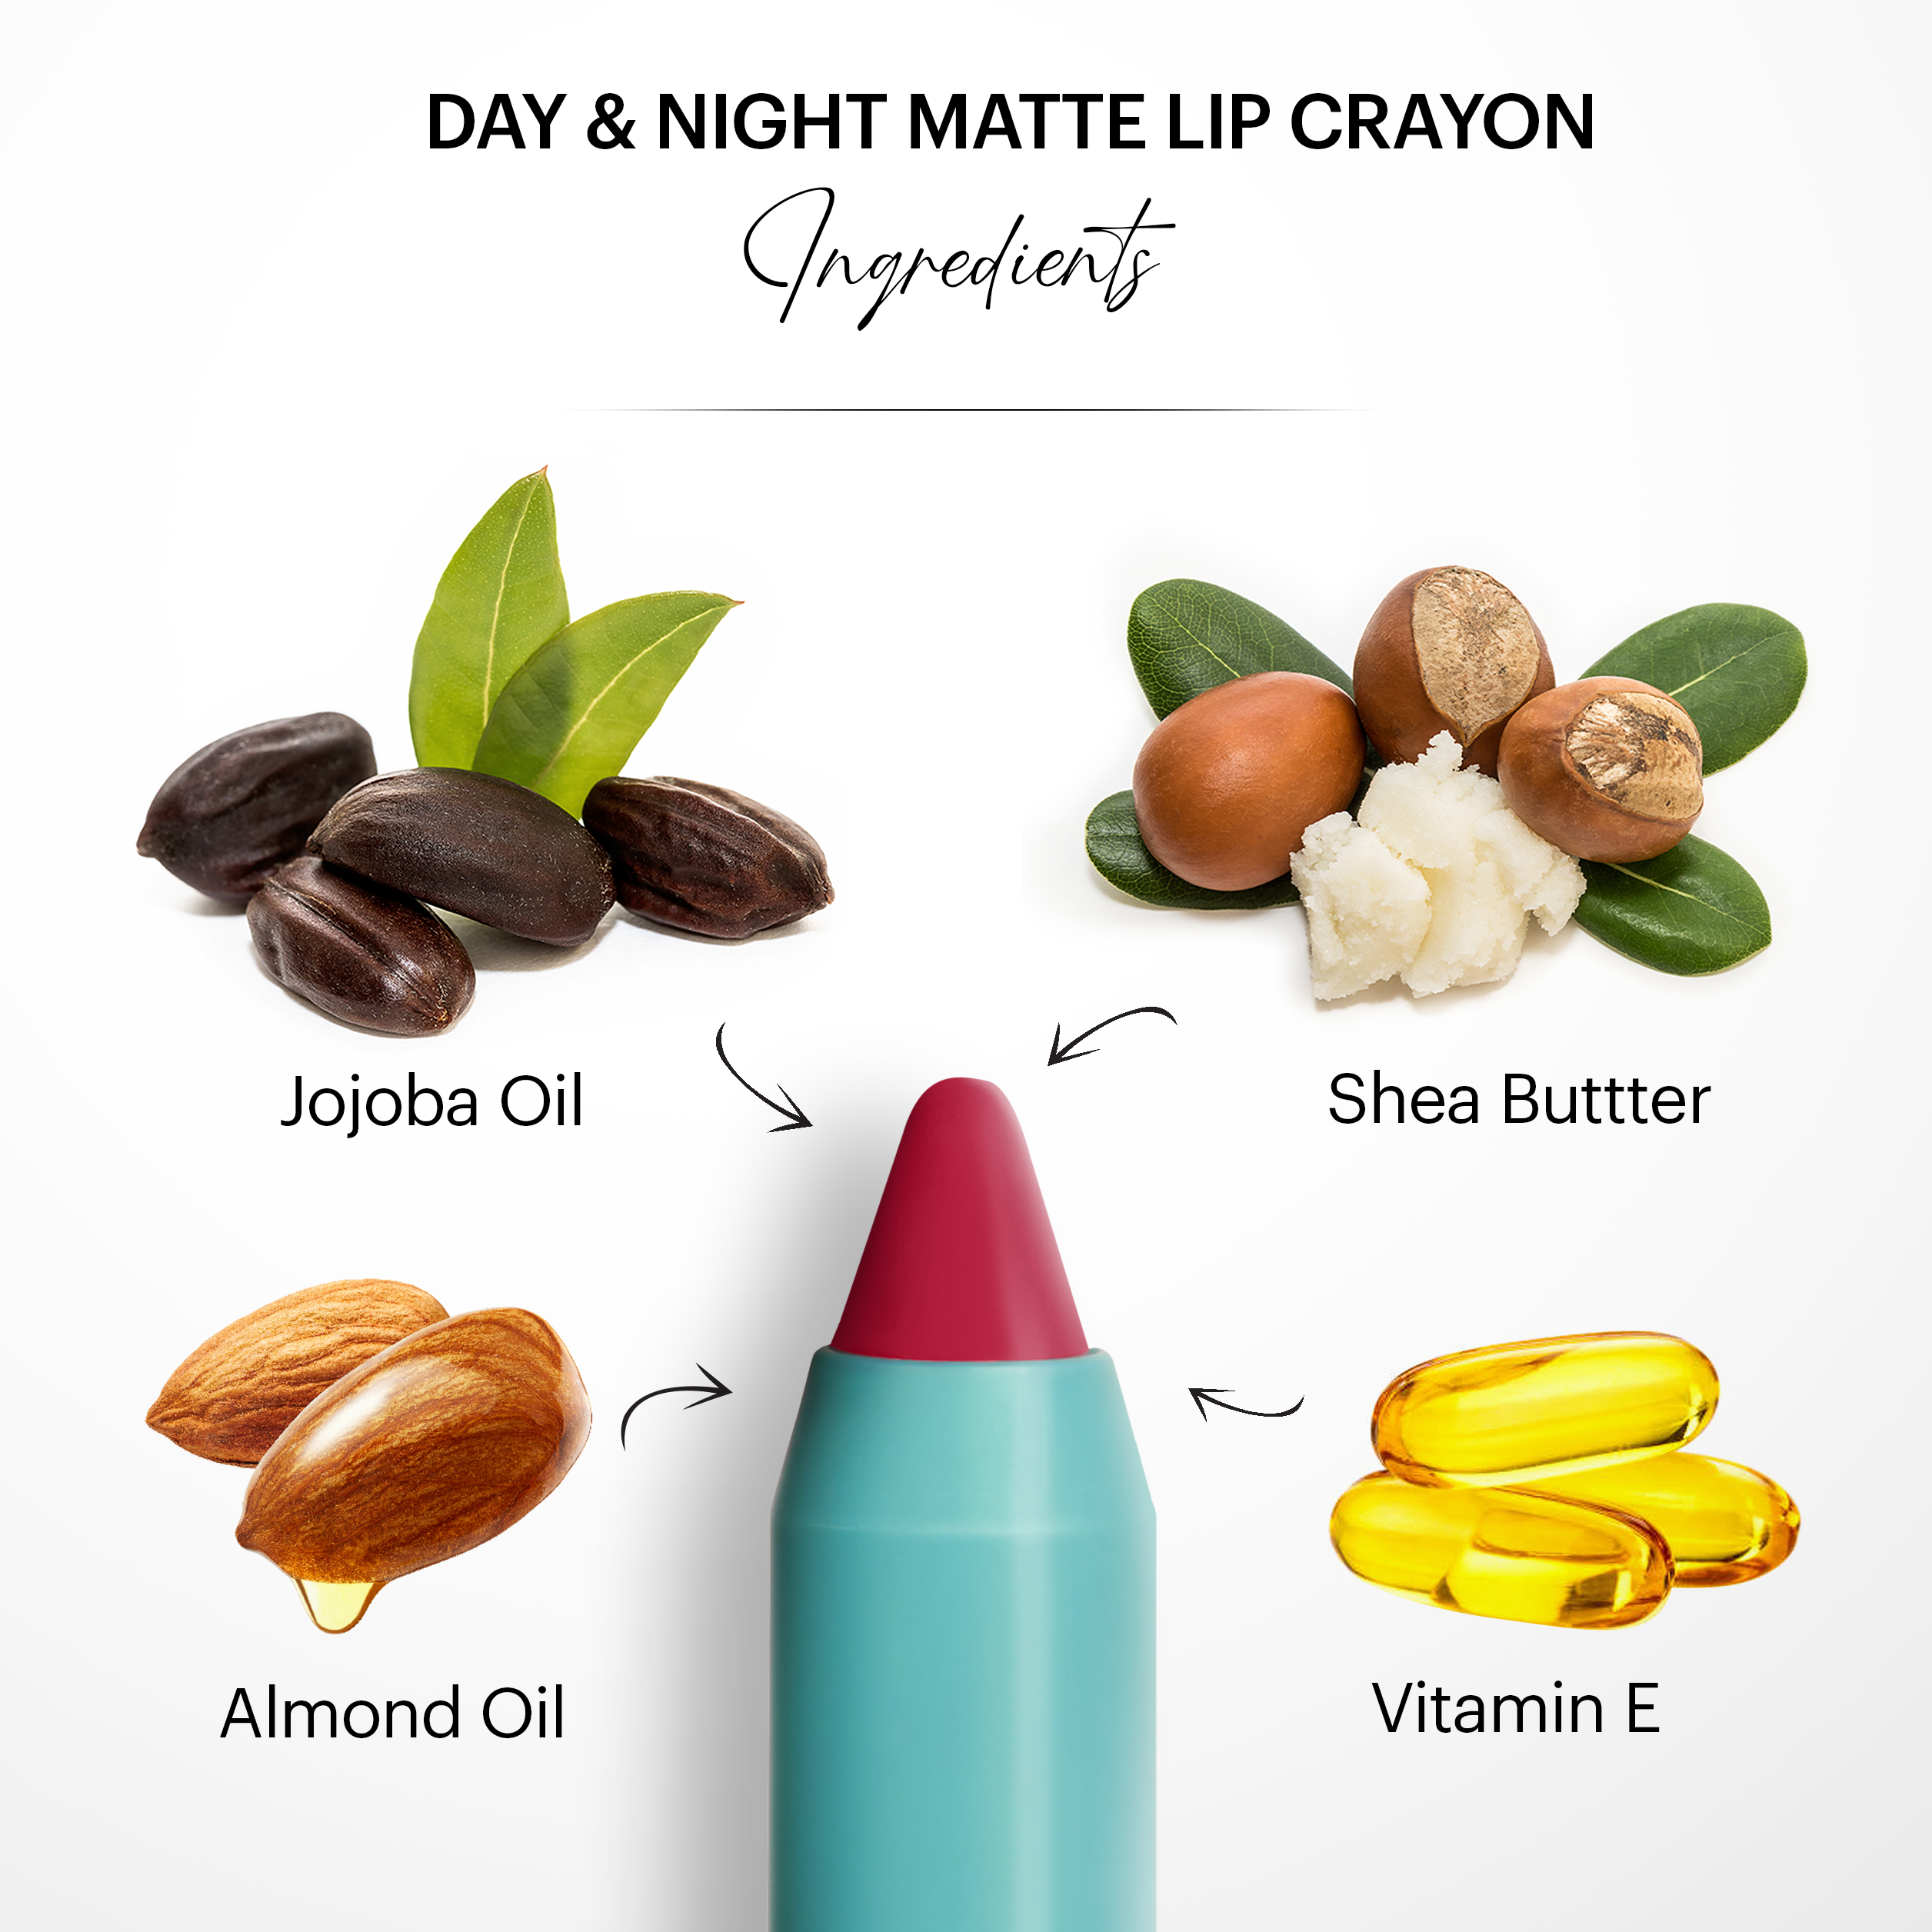 Day & Night Matte Lip Crayon  Shade: Cheerleader 24